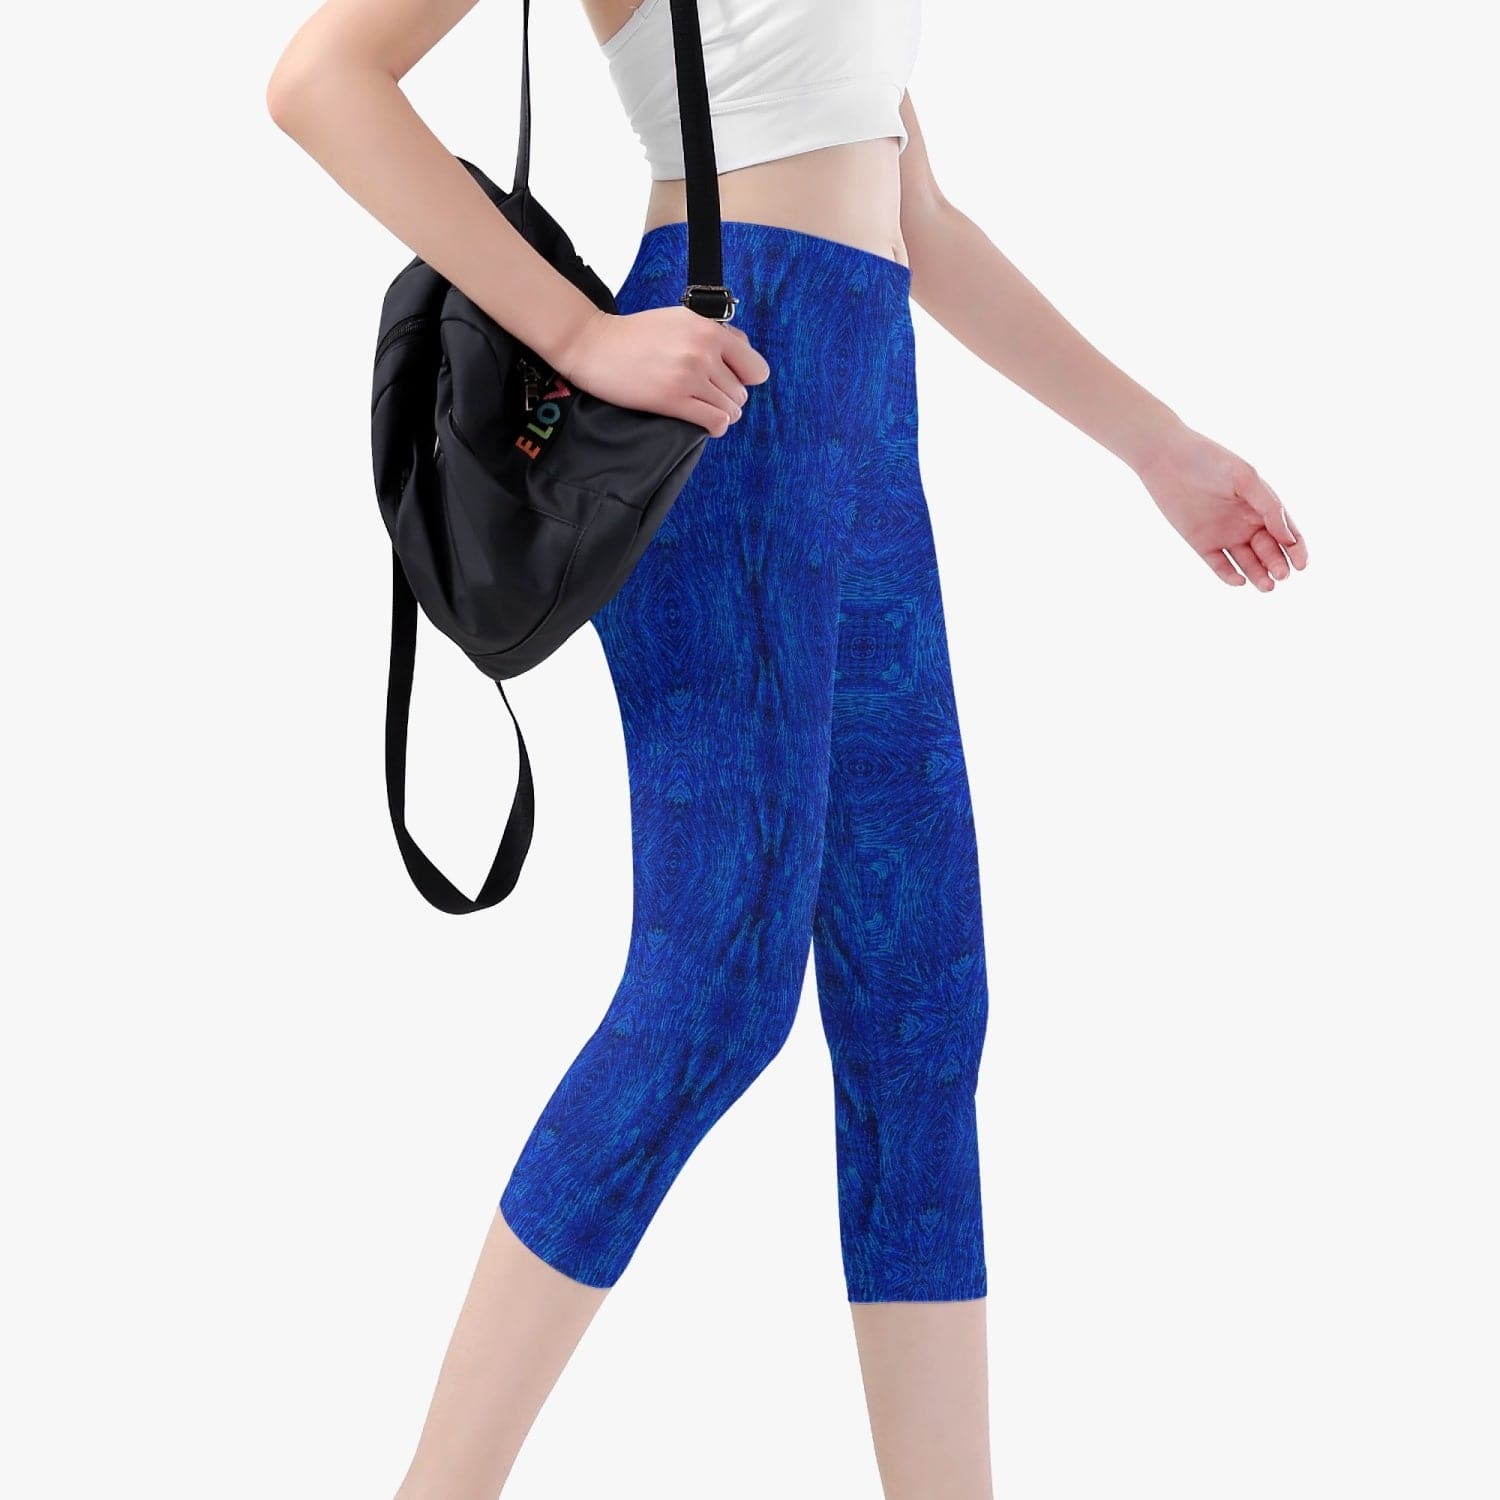 Third Eye Chacra Short Type Yoga Pants, by Sensus Studio Design